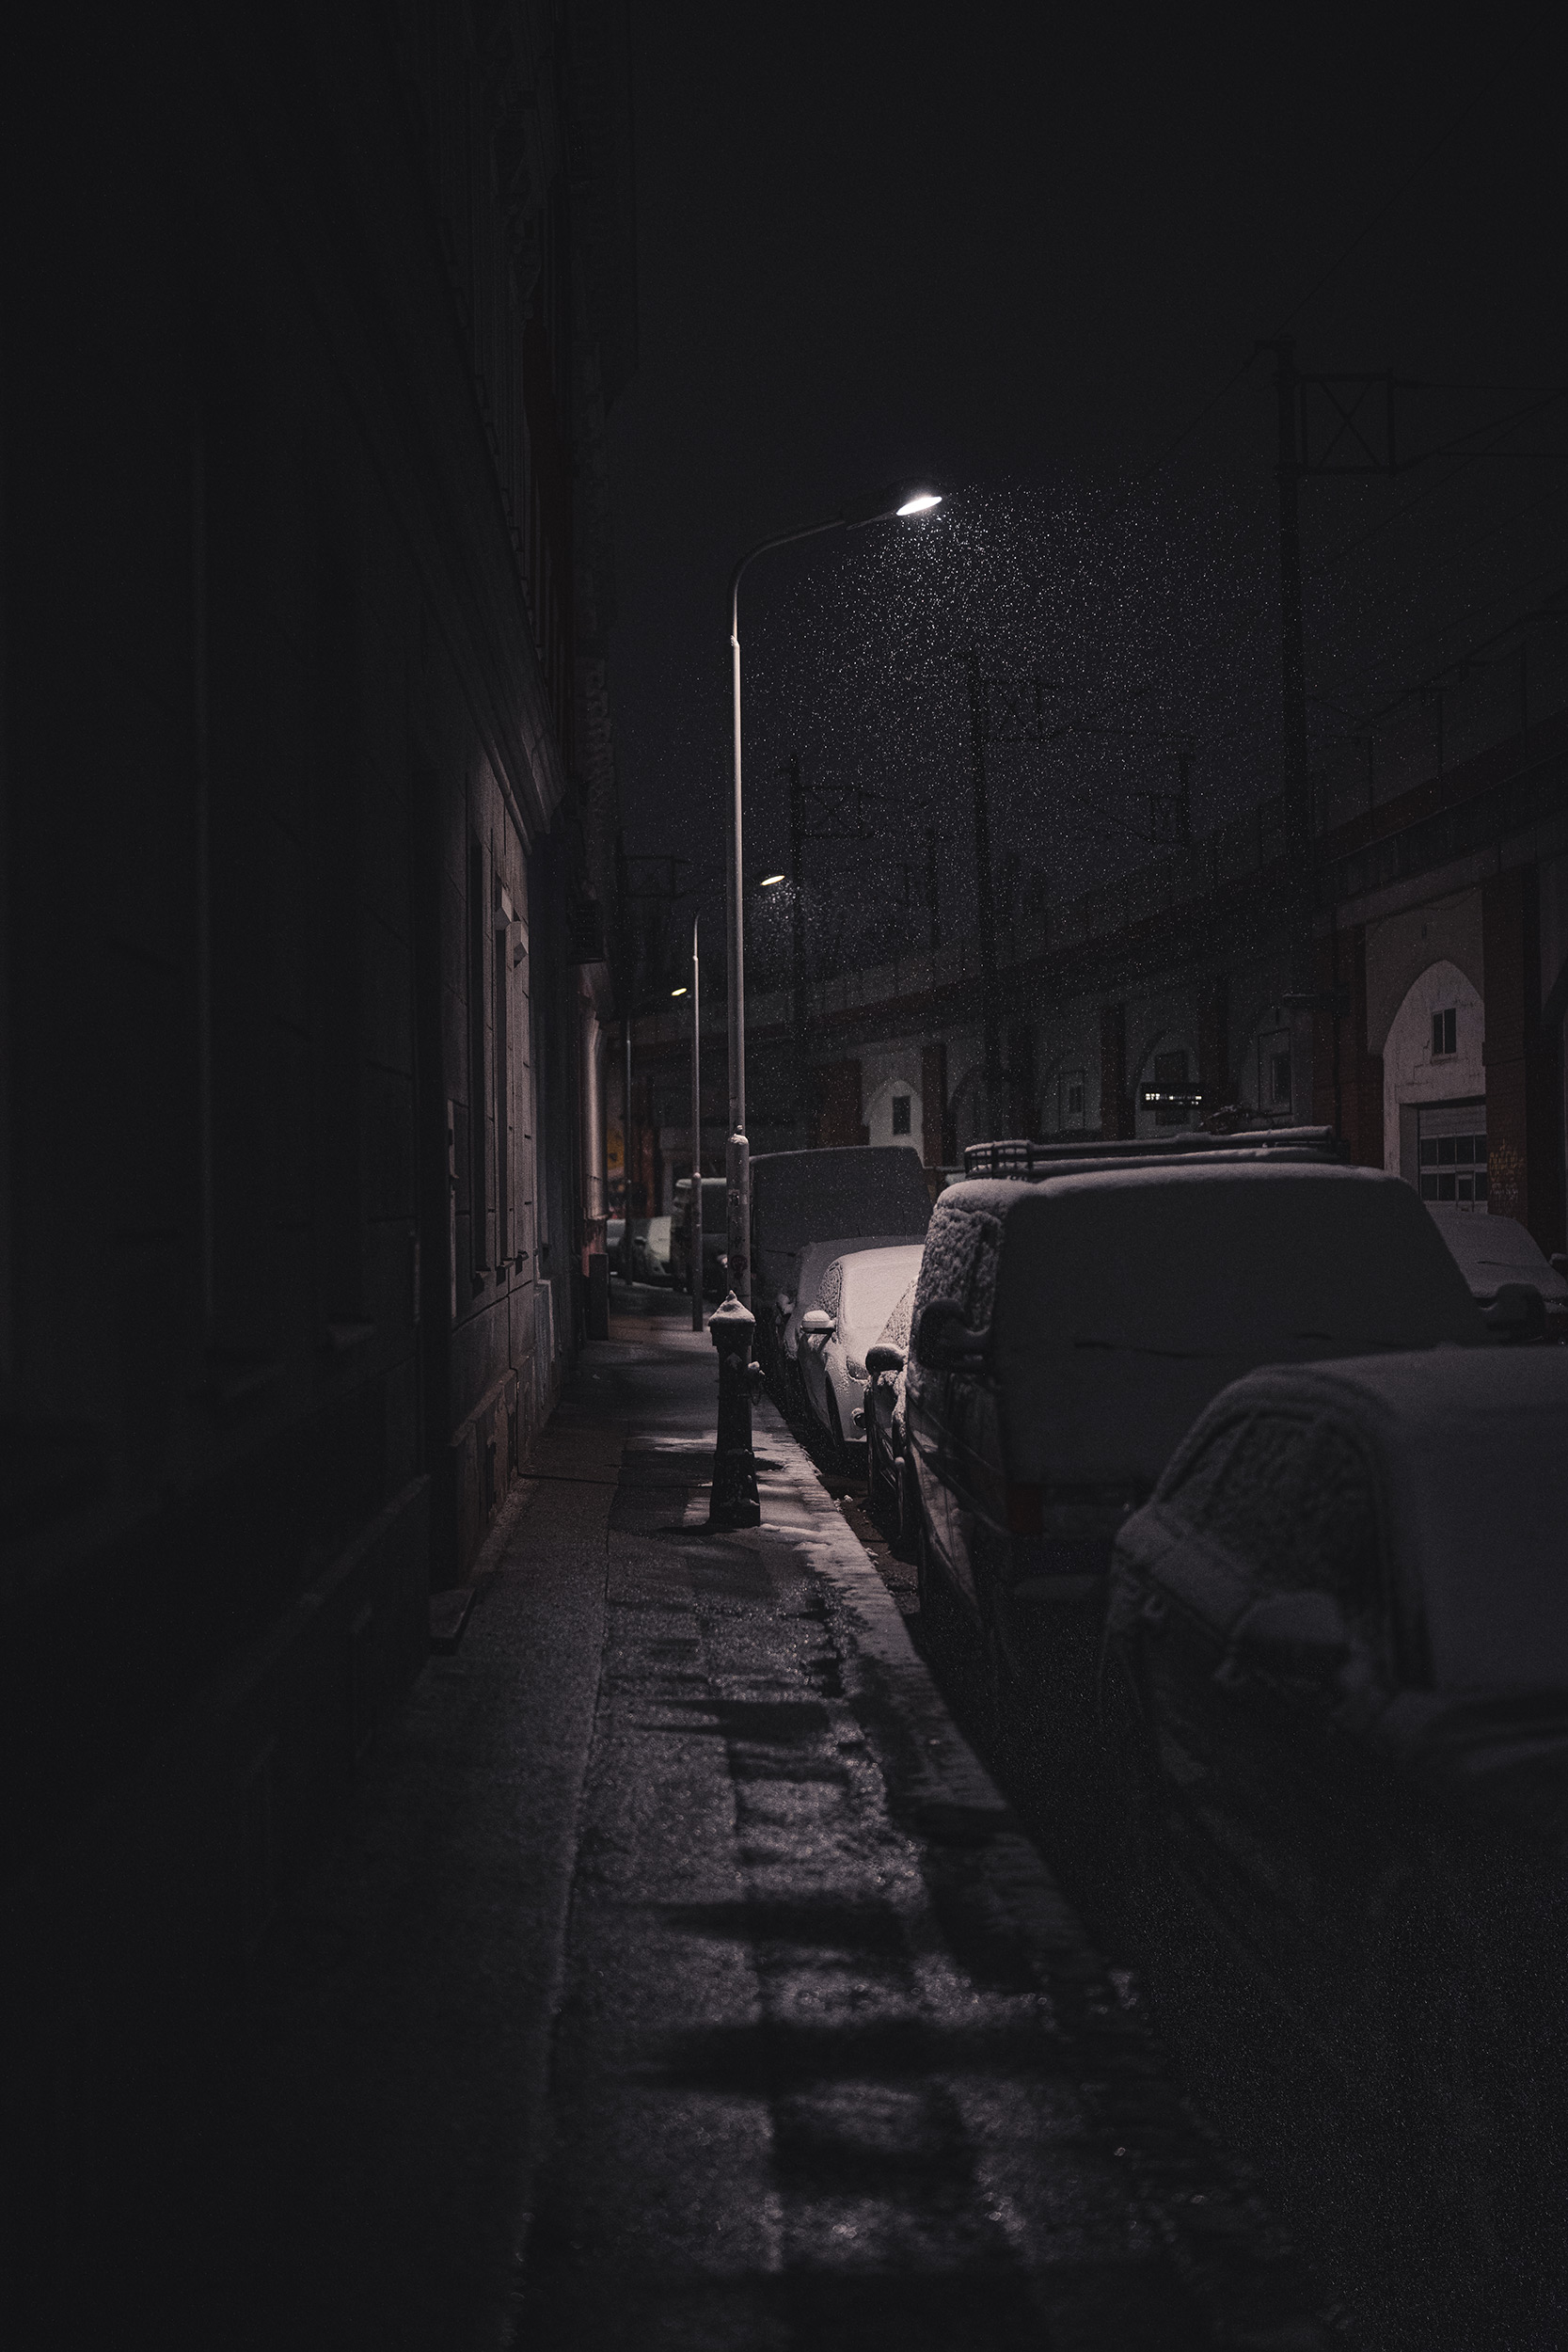 a-light-snow-falling-on-cars-at-night.jpg